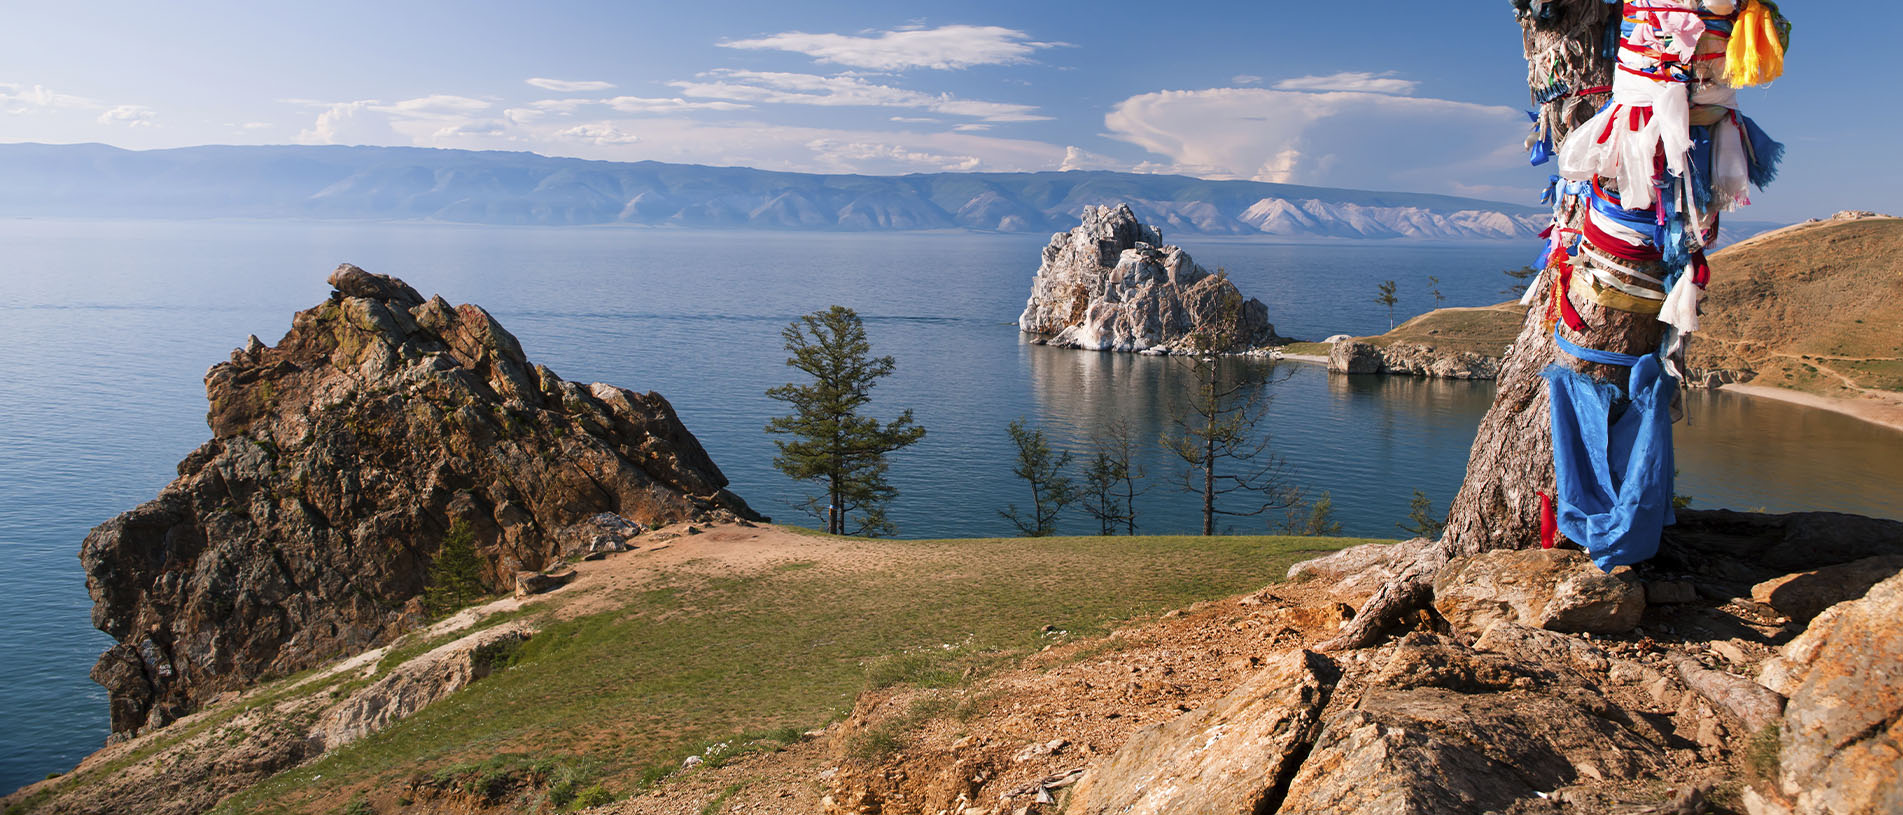 _0013_Baikal landscape.jpg